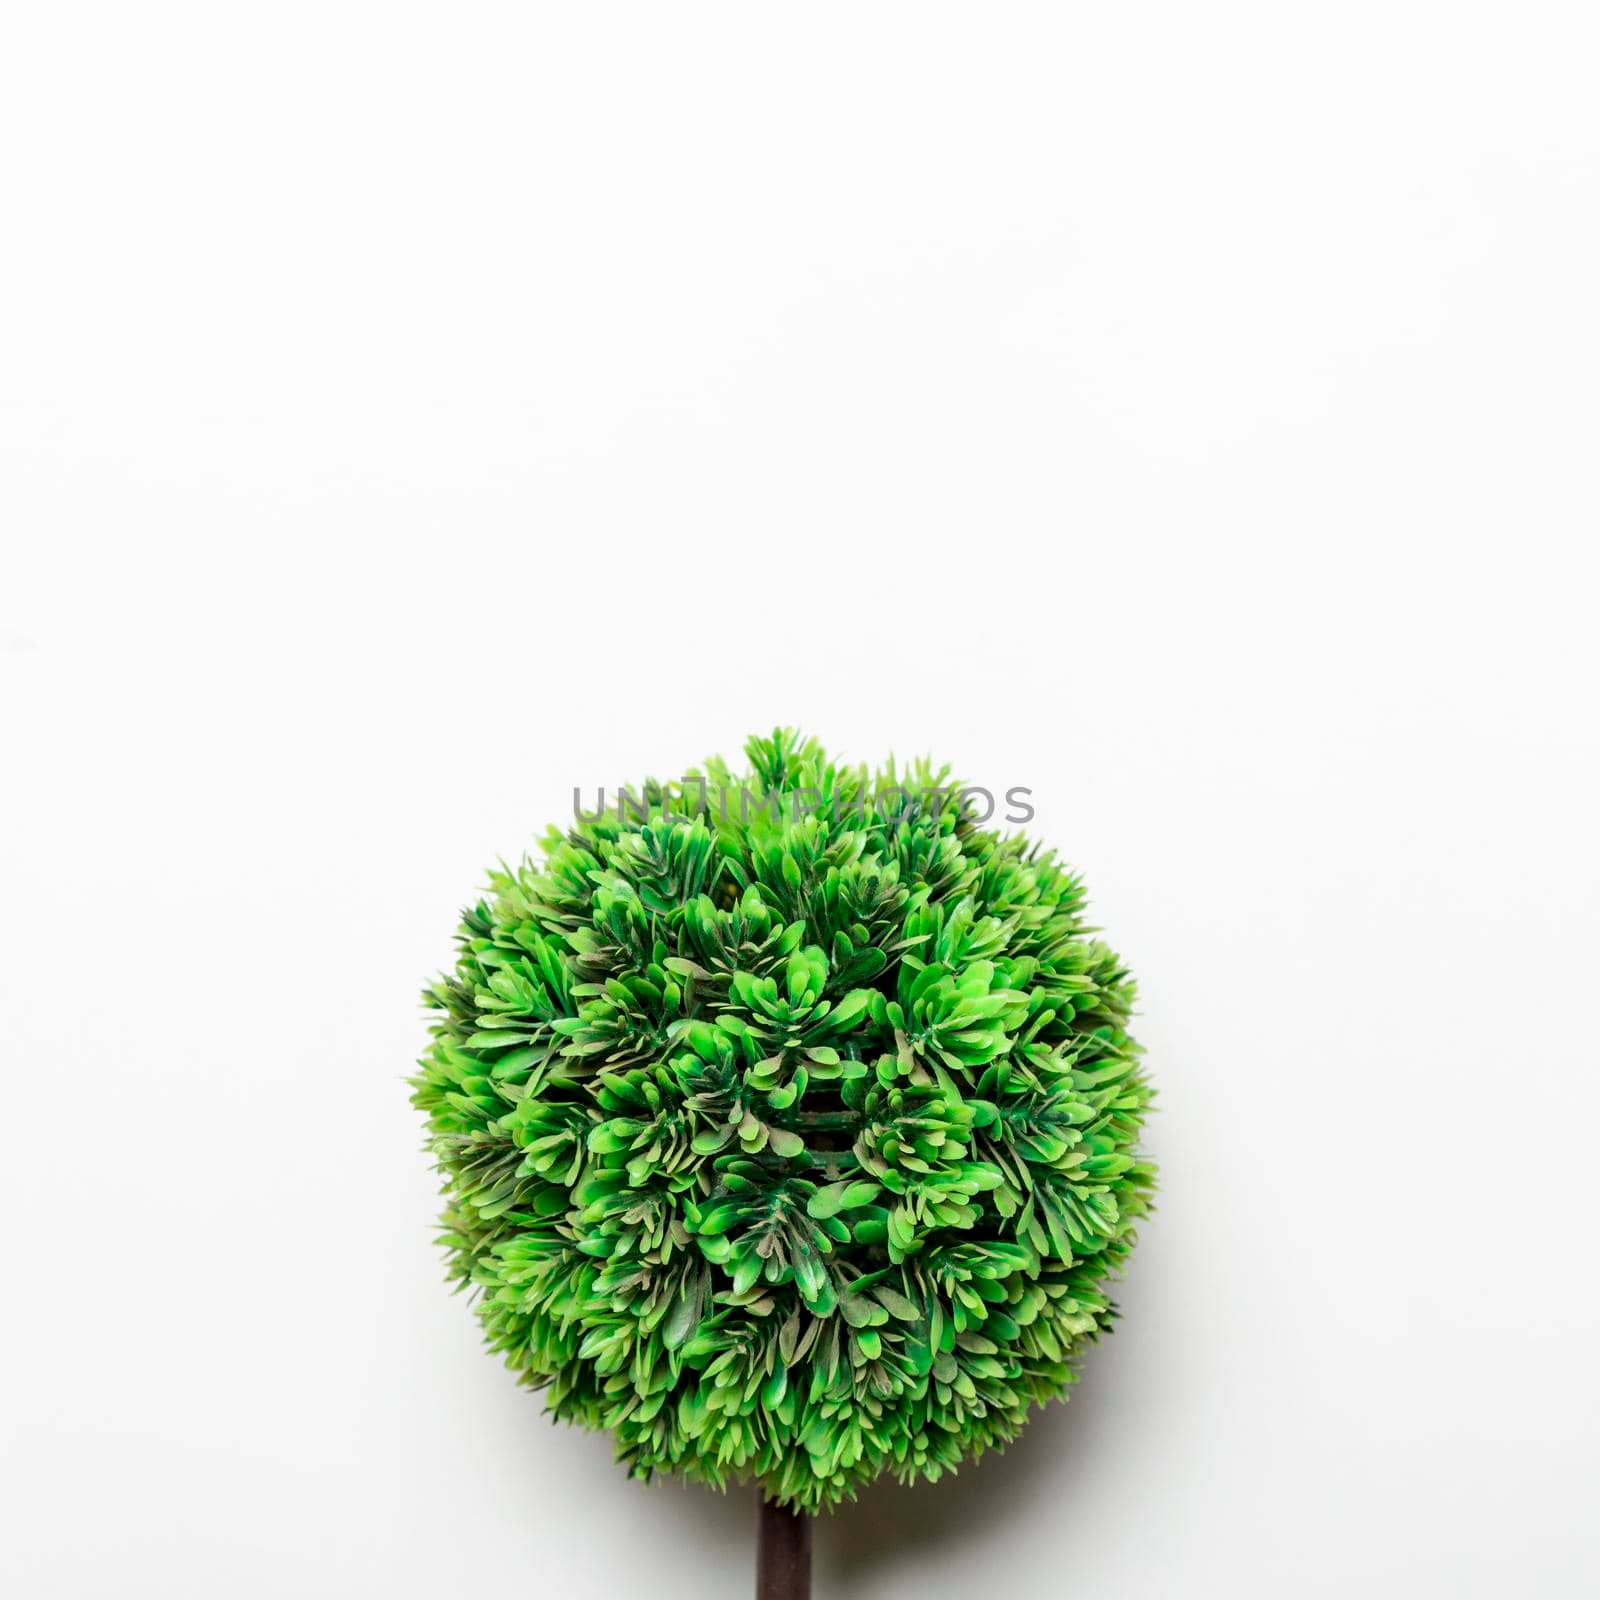 small green decorative tree. High quality photo by Zahard